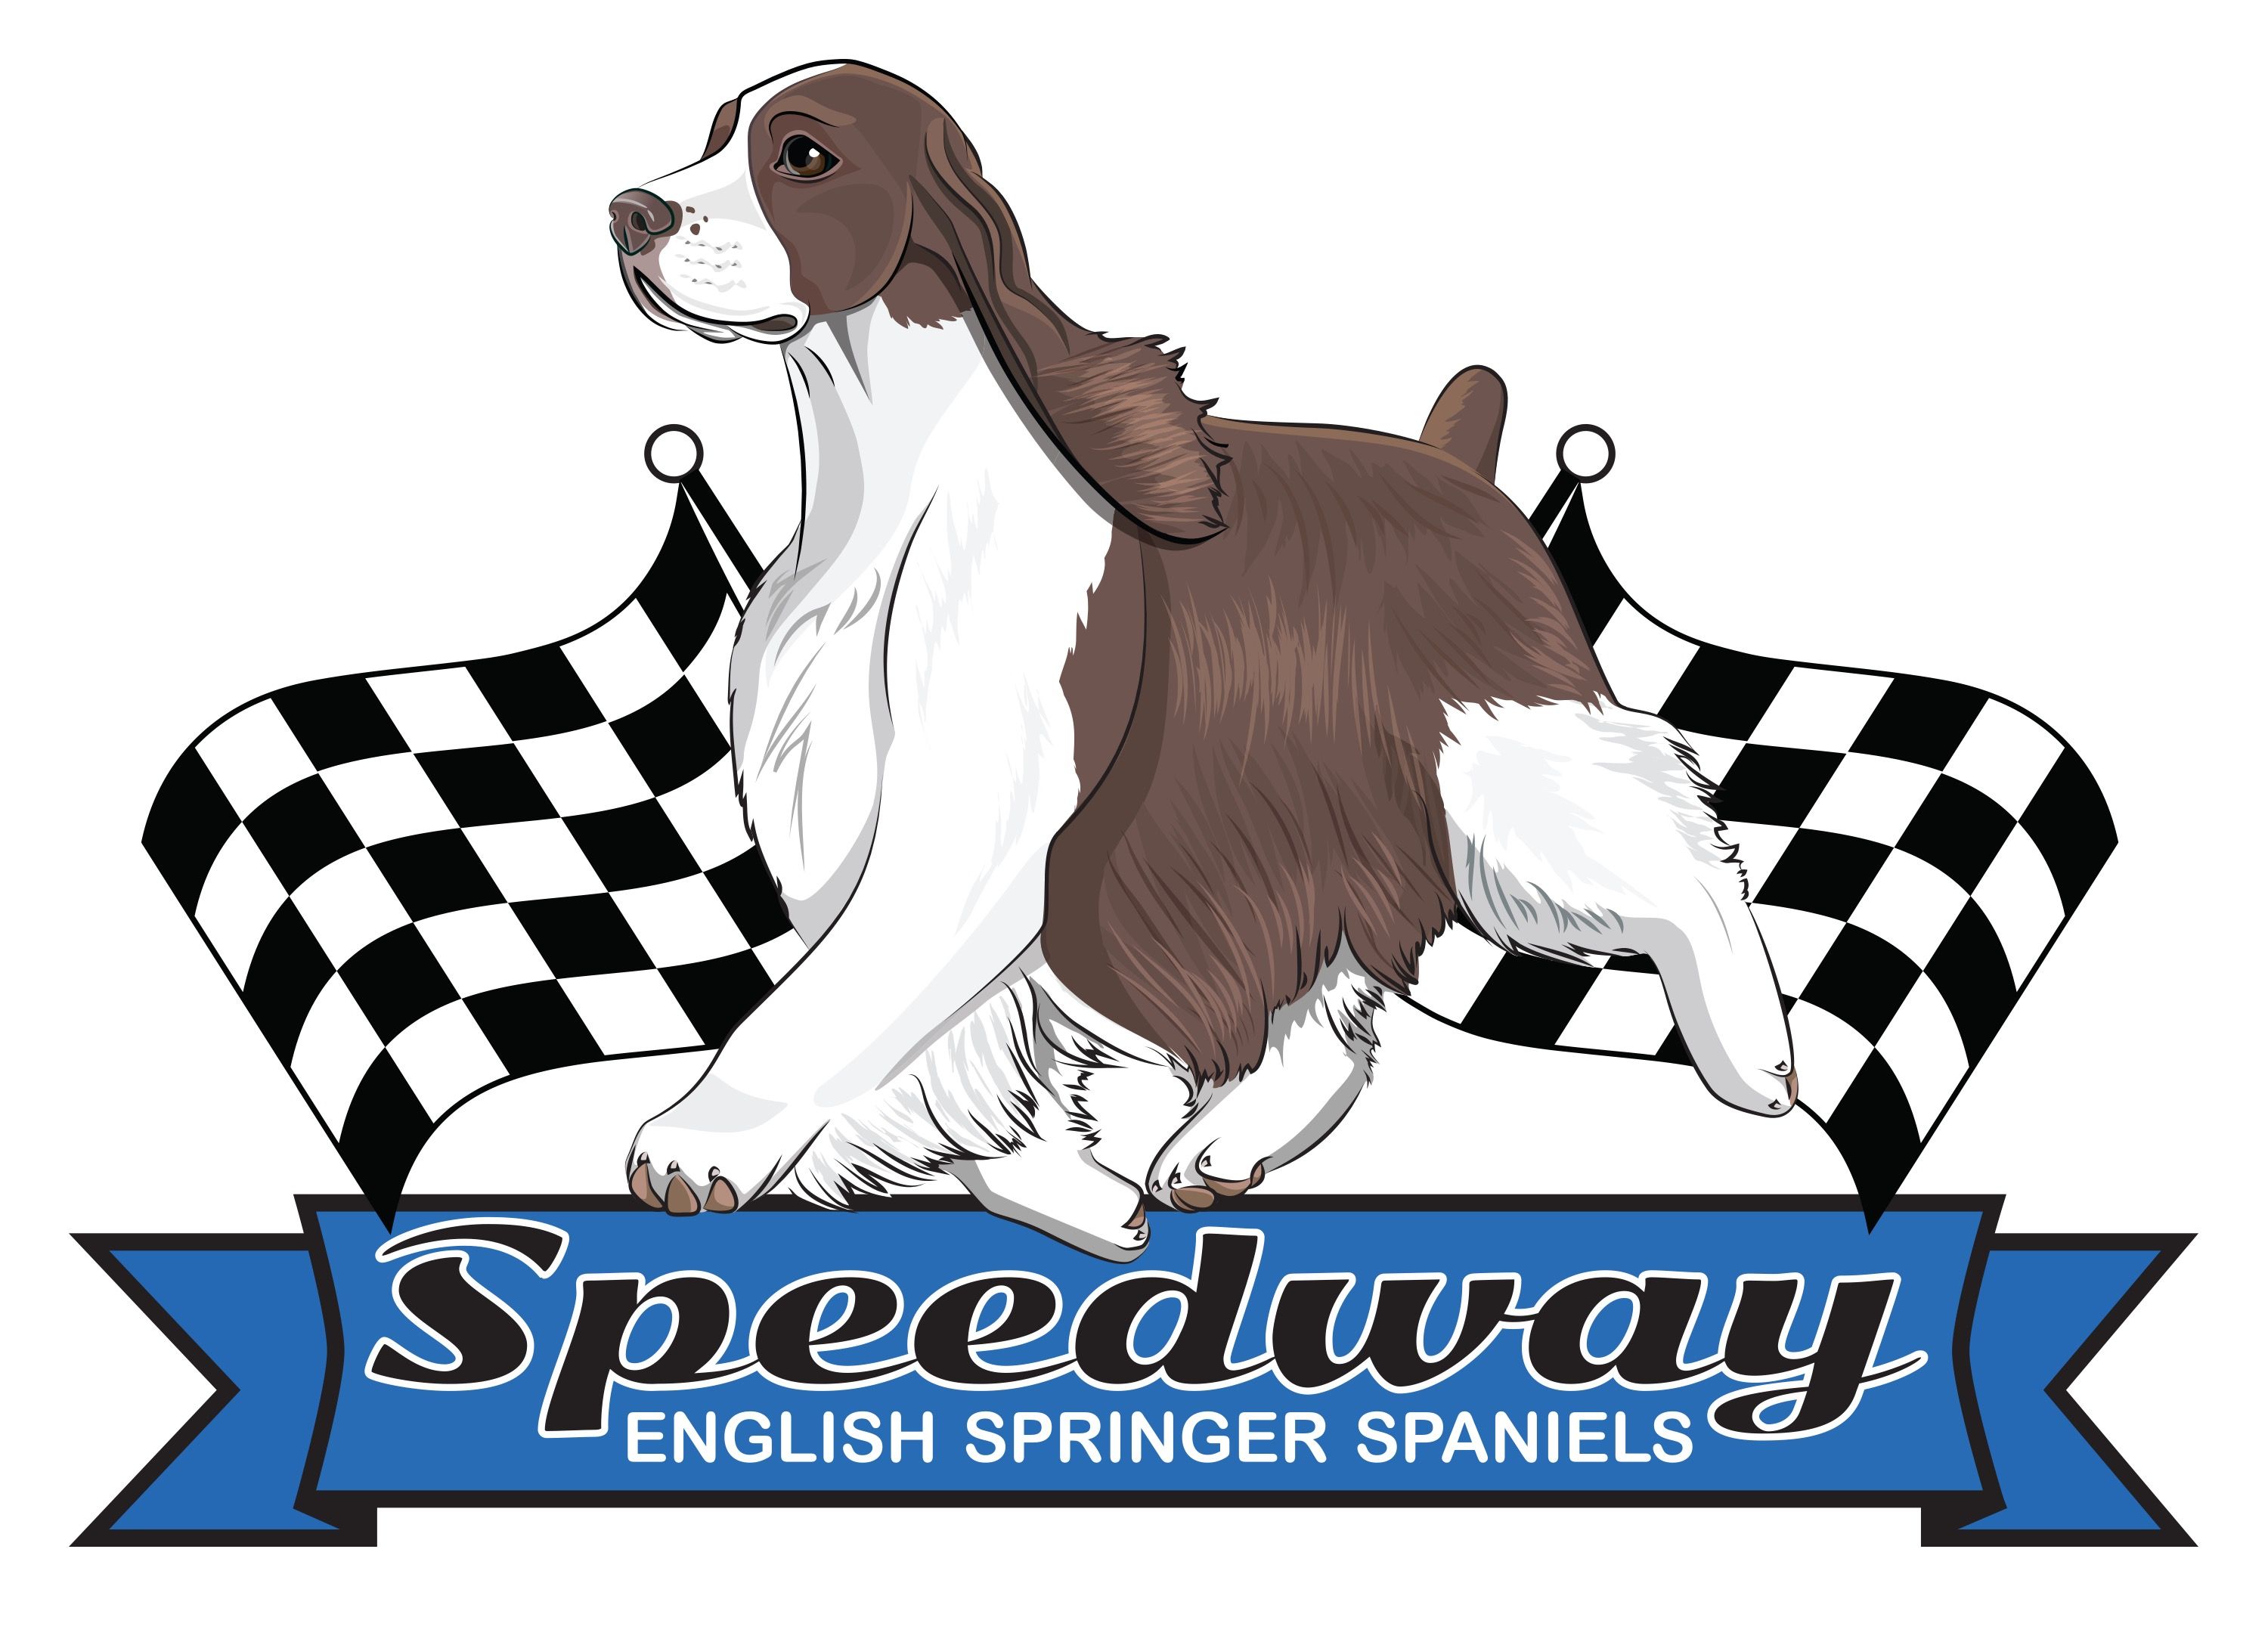 Speedway English Springer Spaniels